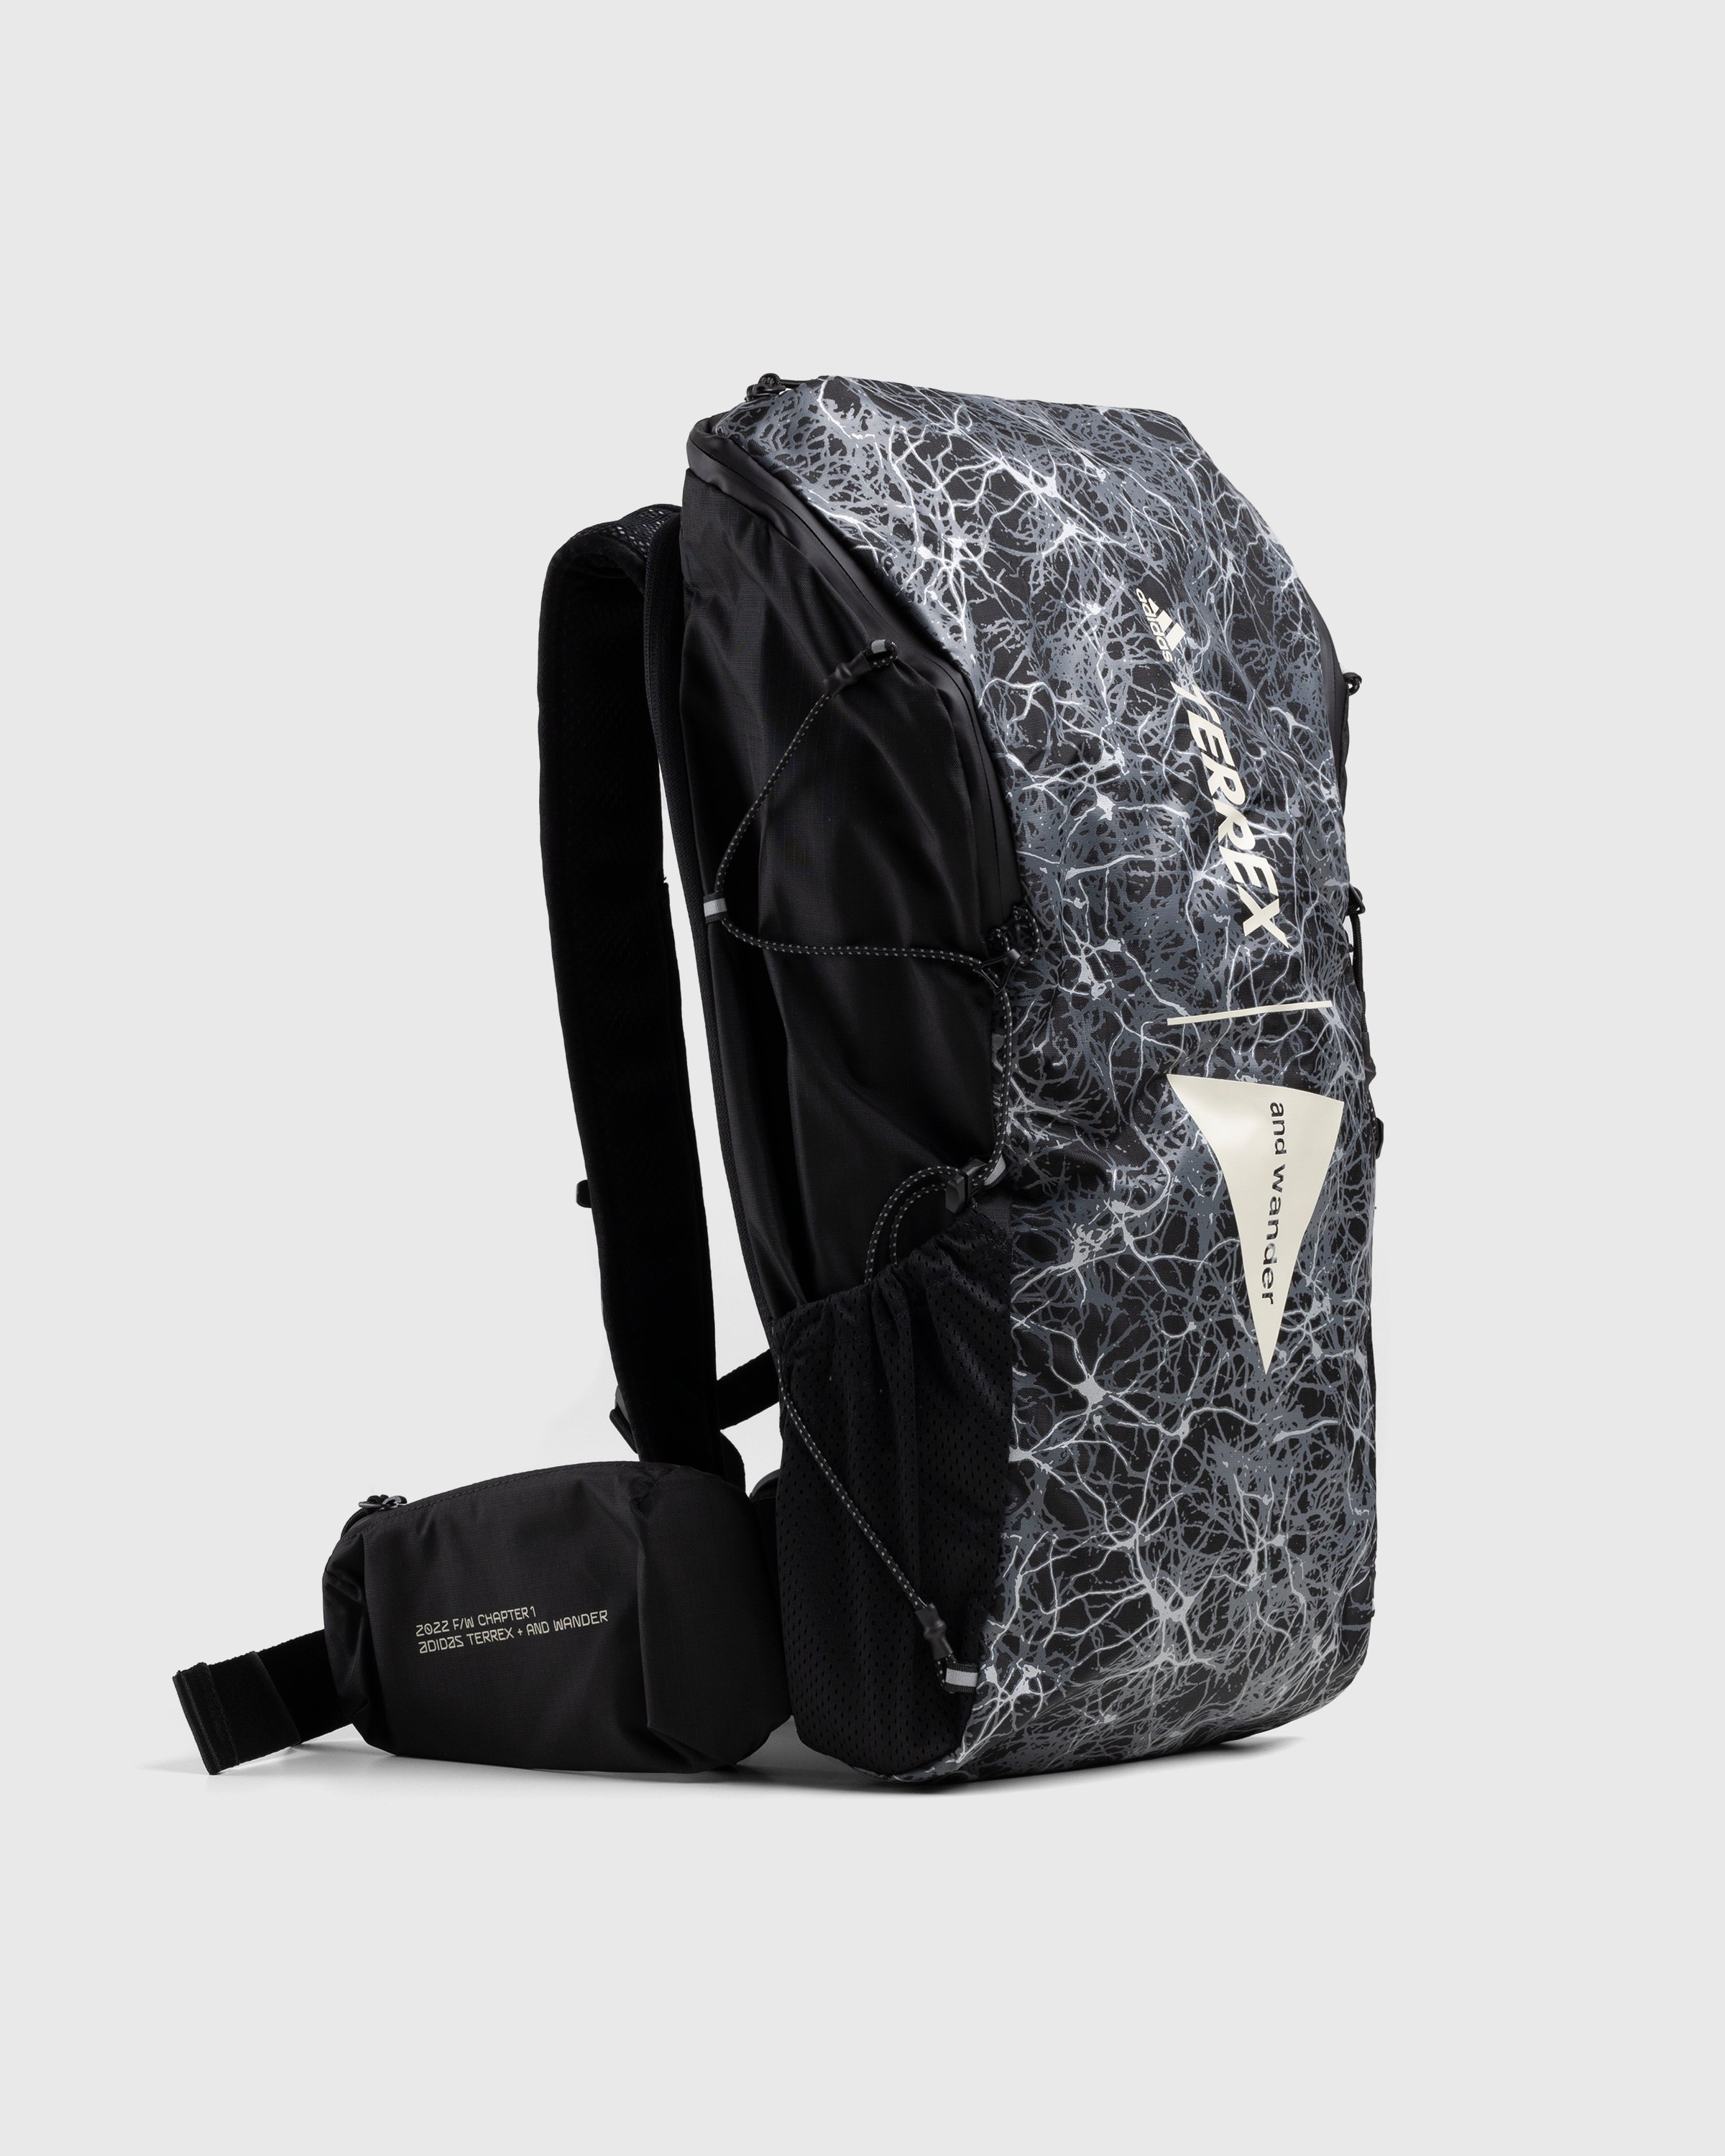 Adidas x And Wander - TERREX Hiking Backpack Black/Grey - Accessories - Black - Image 2